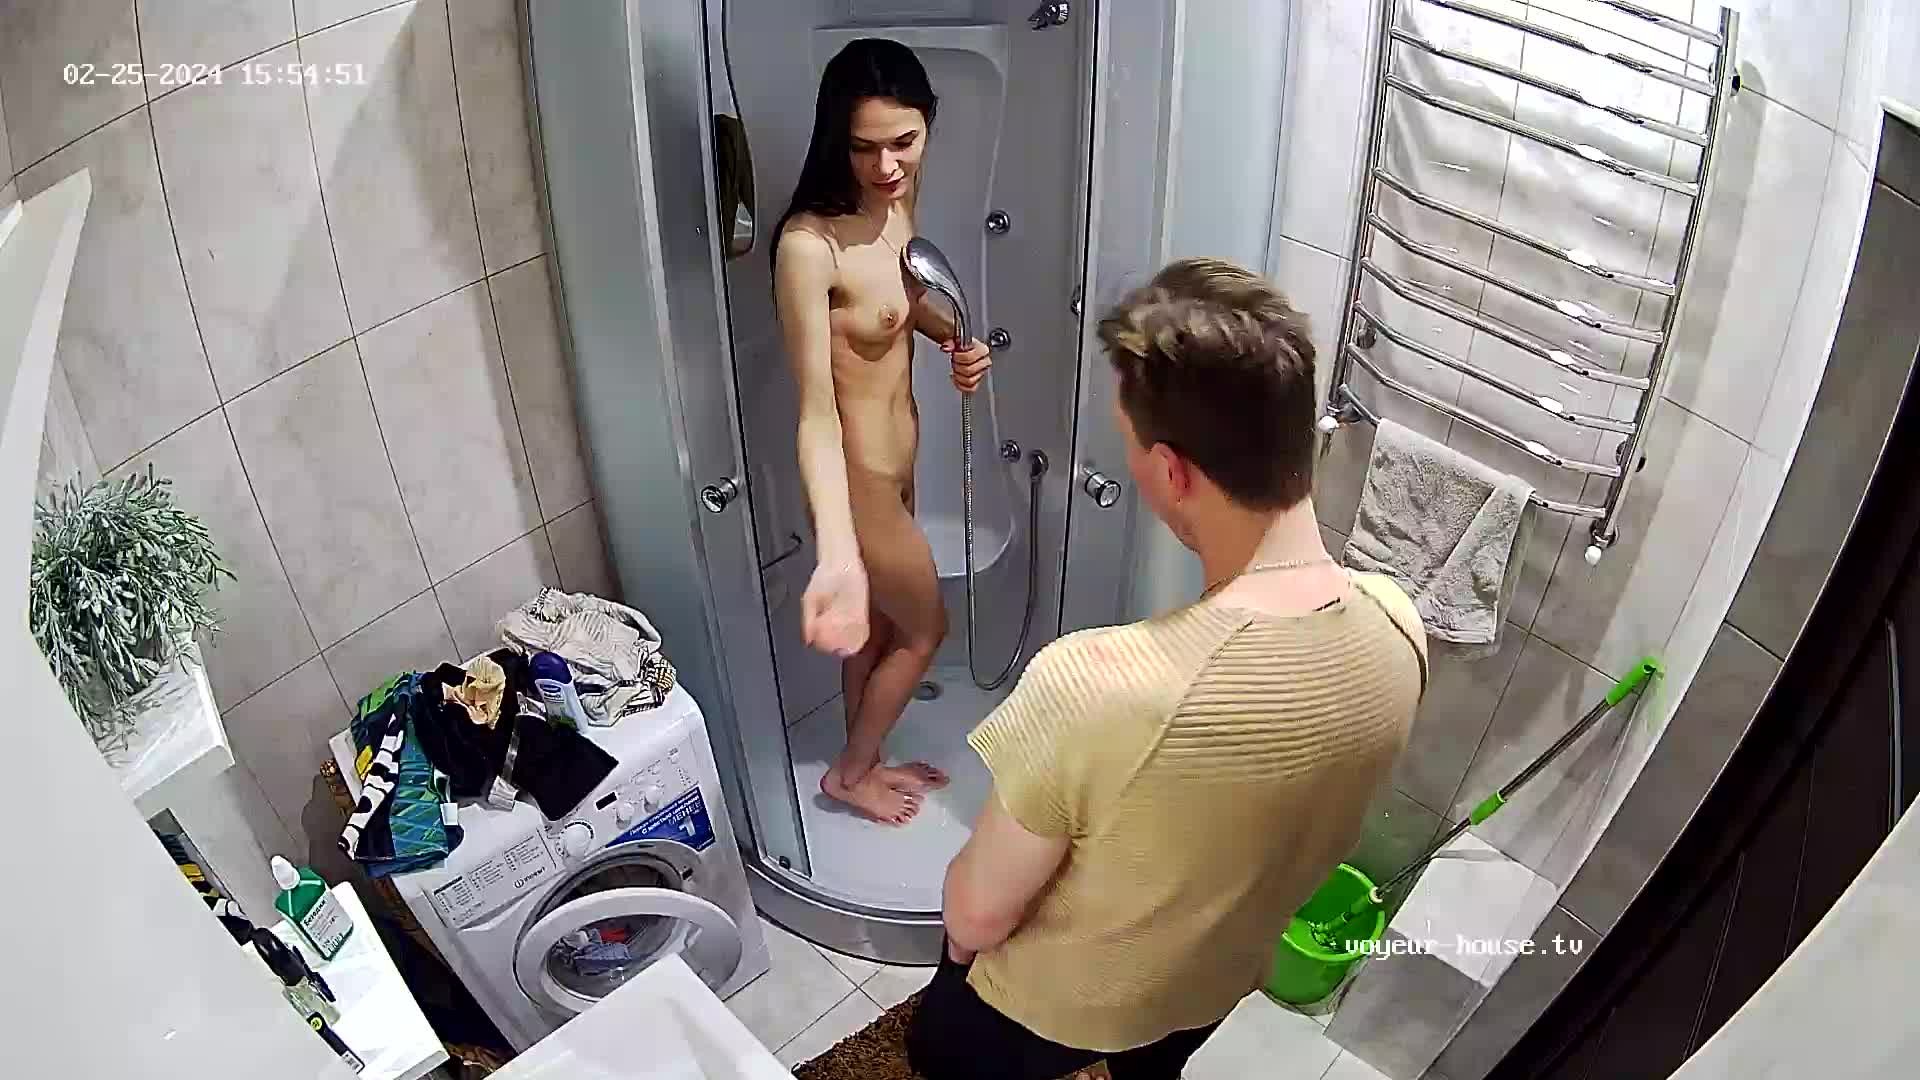 Yuneska & Radu friend showering, 25/02/2024